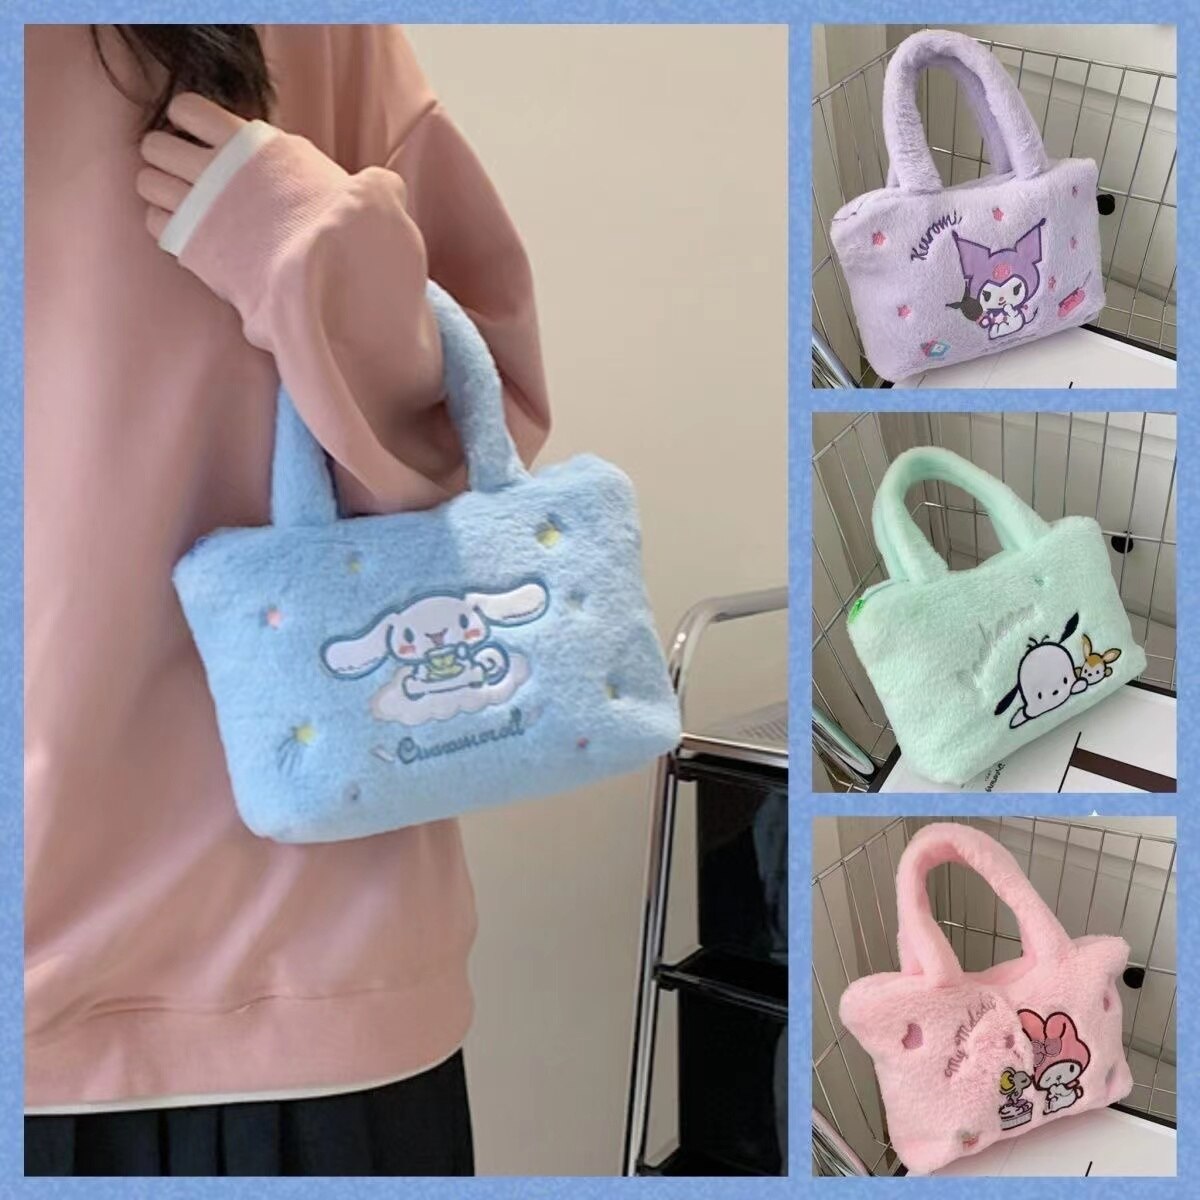 Sanrio Hello Kitty Plush Handbags